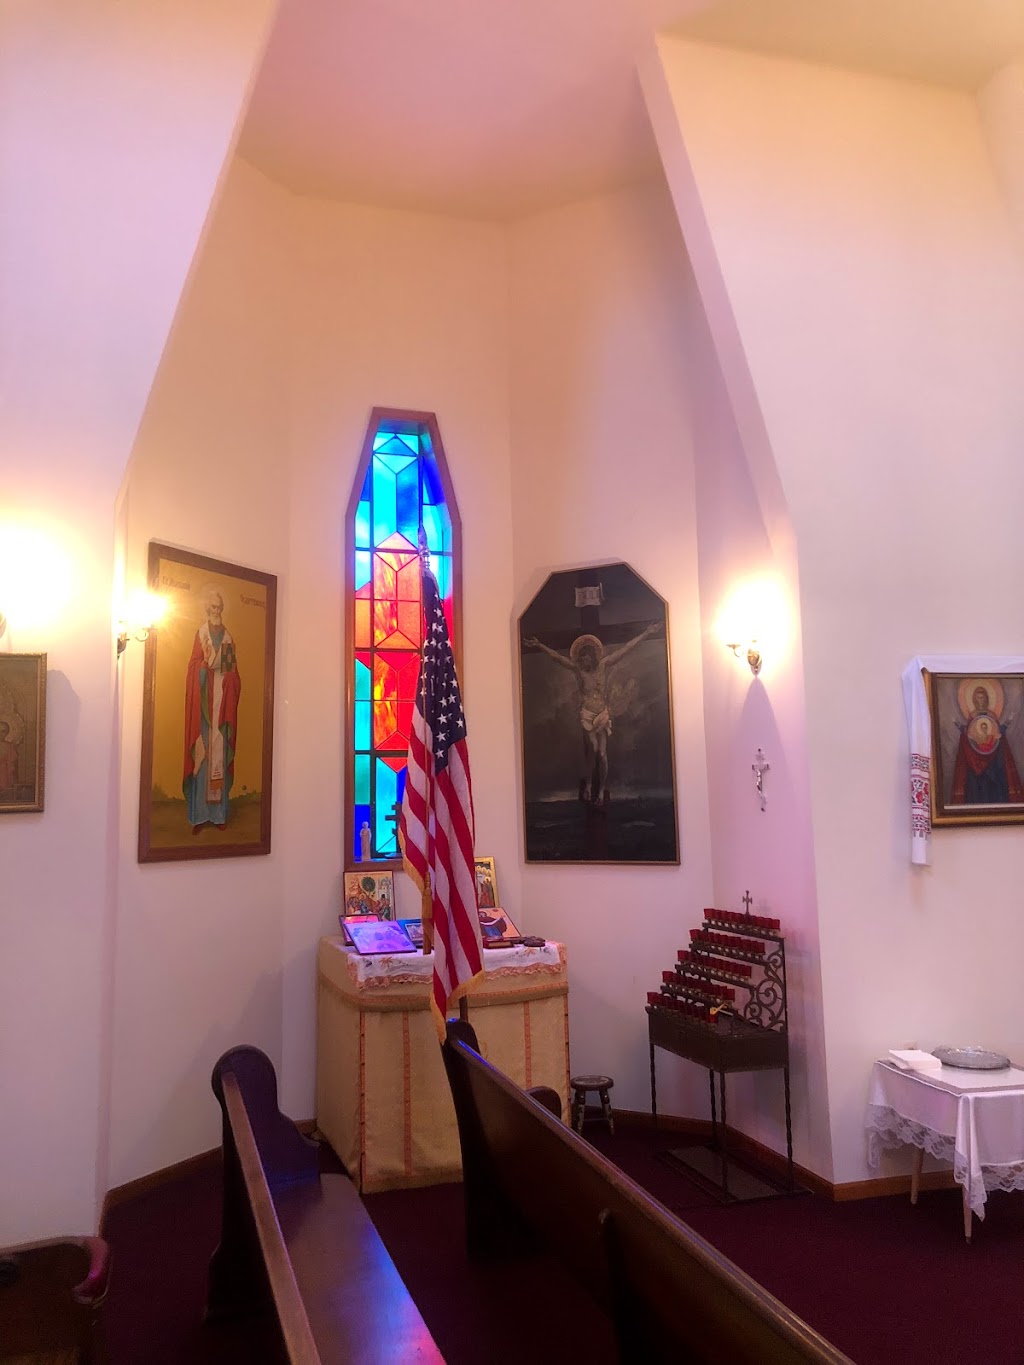 Saints Peter & Paul Ukrainian Orthodox Church | 329 High Rd, Glen Spey, NY 12737 | Phone: (845) 856-7441